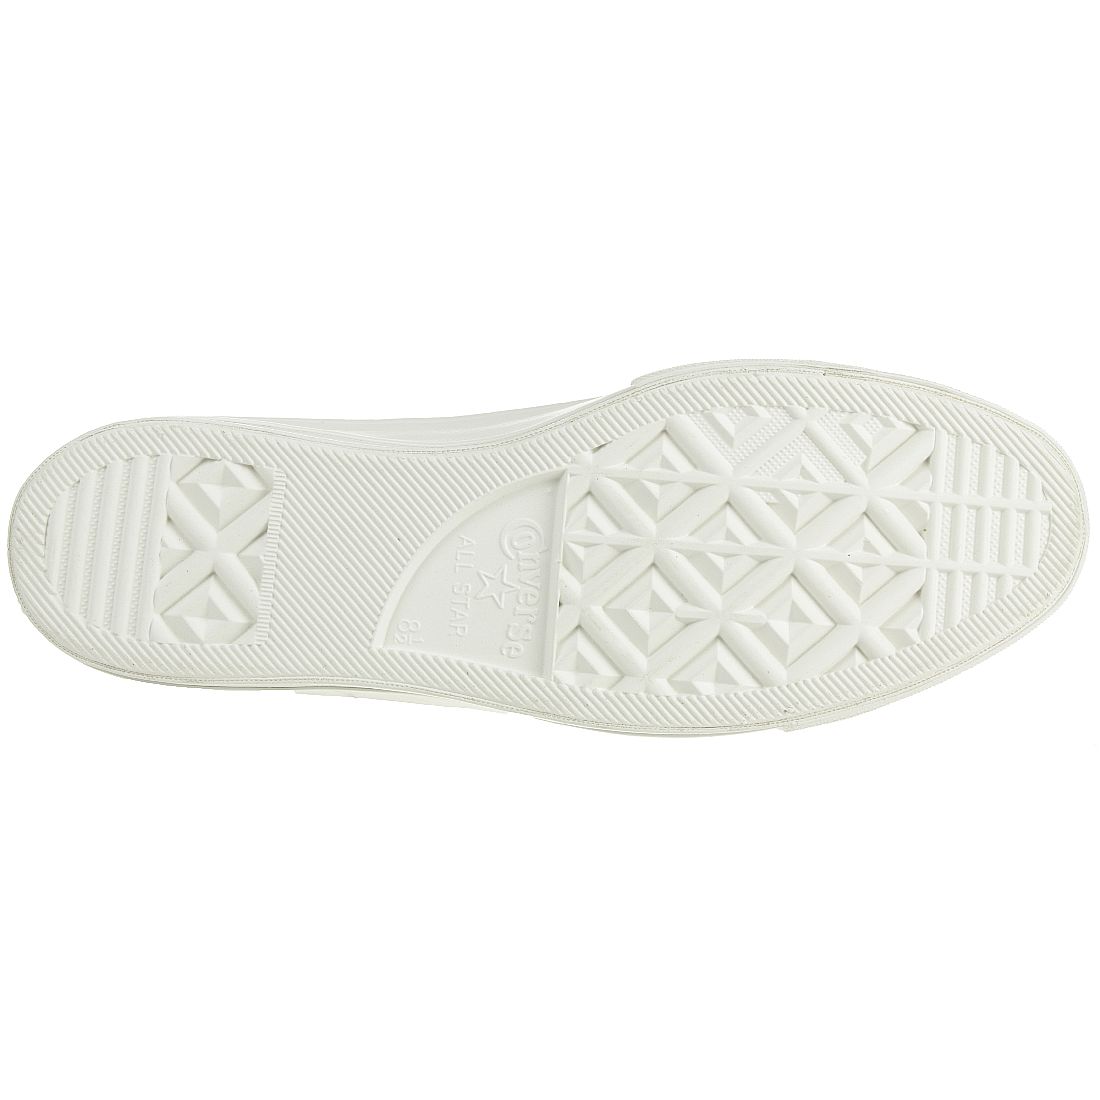 Converse CTAS LIFT OX  Sneaker  white/vintage white 564429C